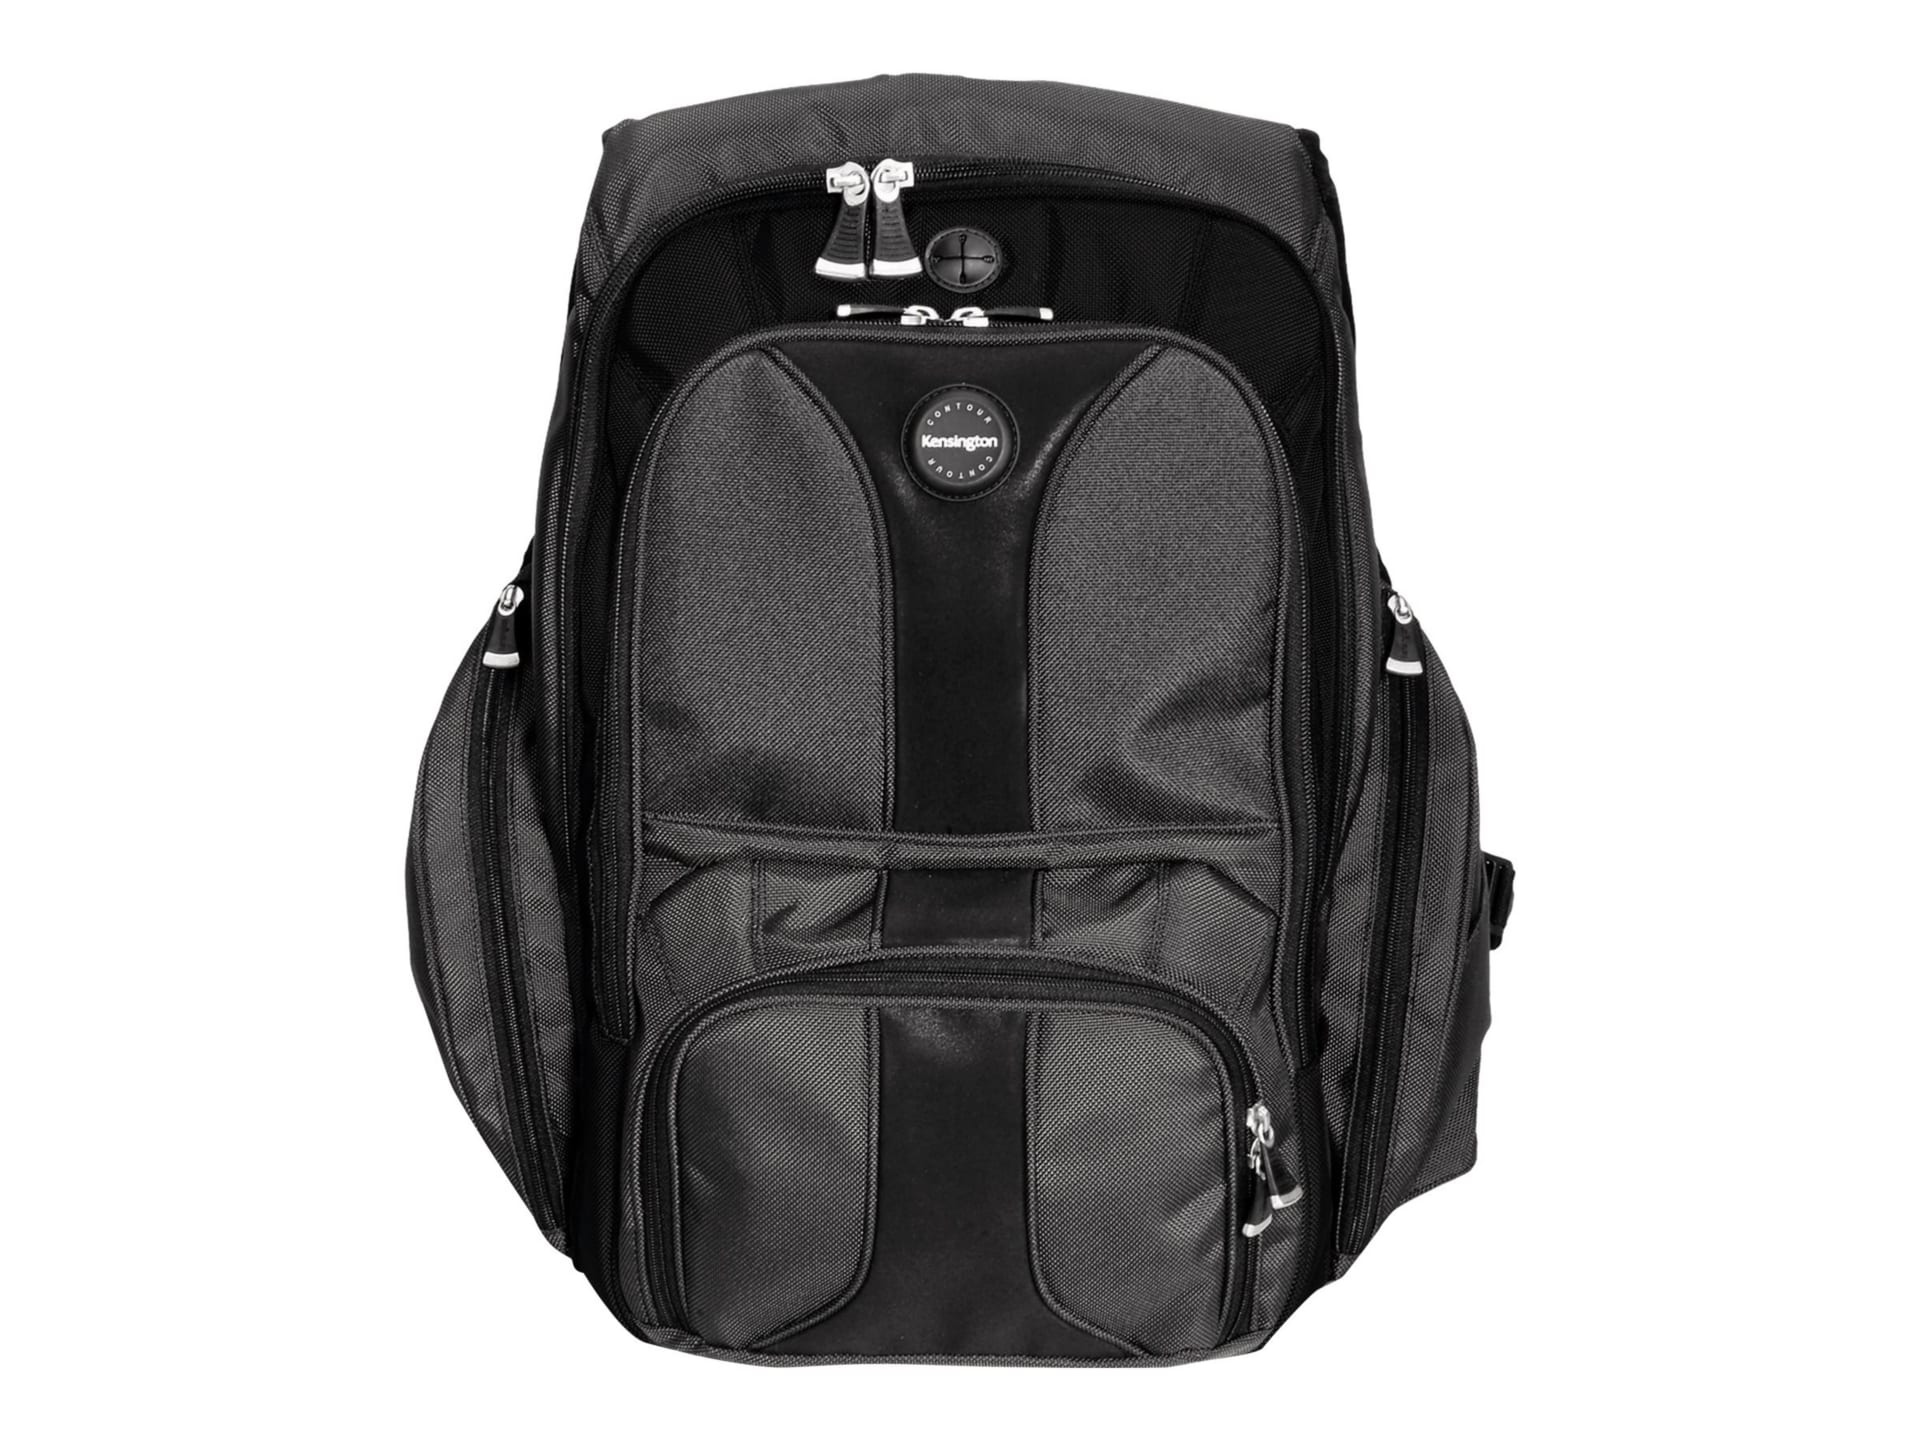 Kensington Contour Backpack - notebook carrying backpack